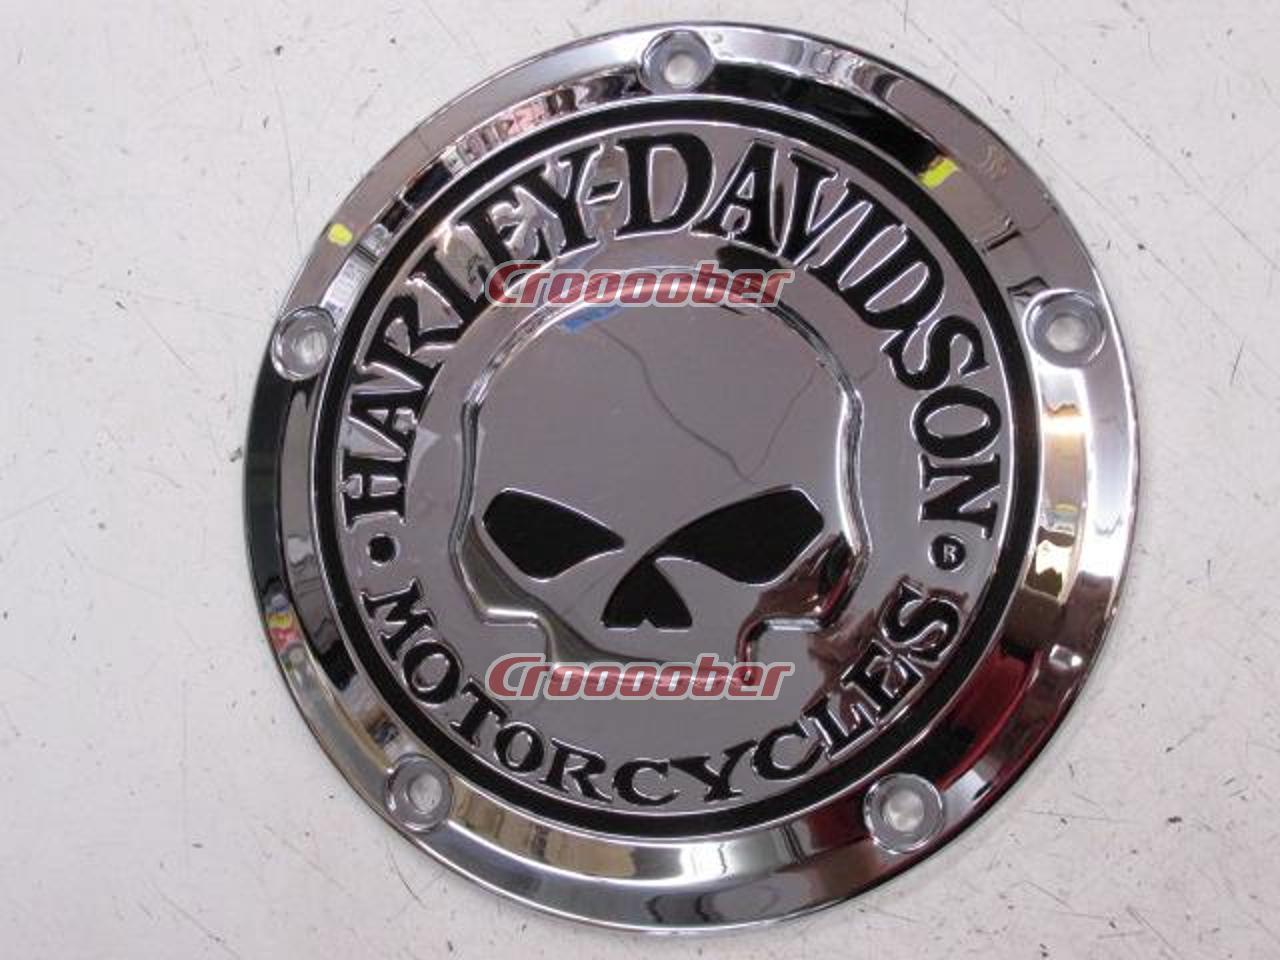 Harley-Davidson(ハーレーダビッドソン) ウィリーG.・スカル 